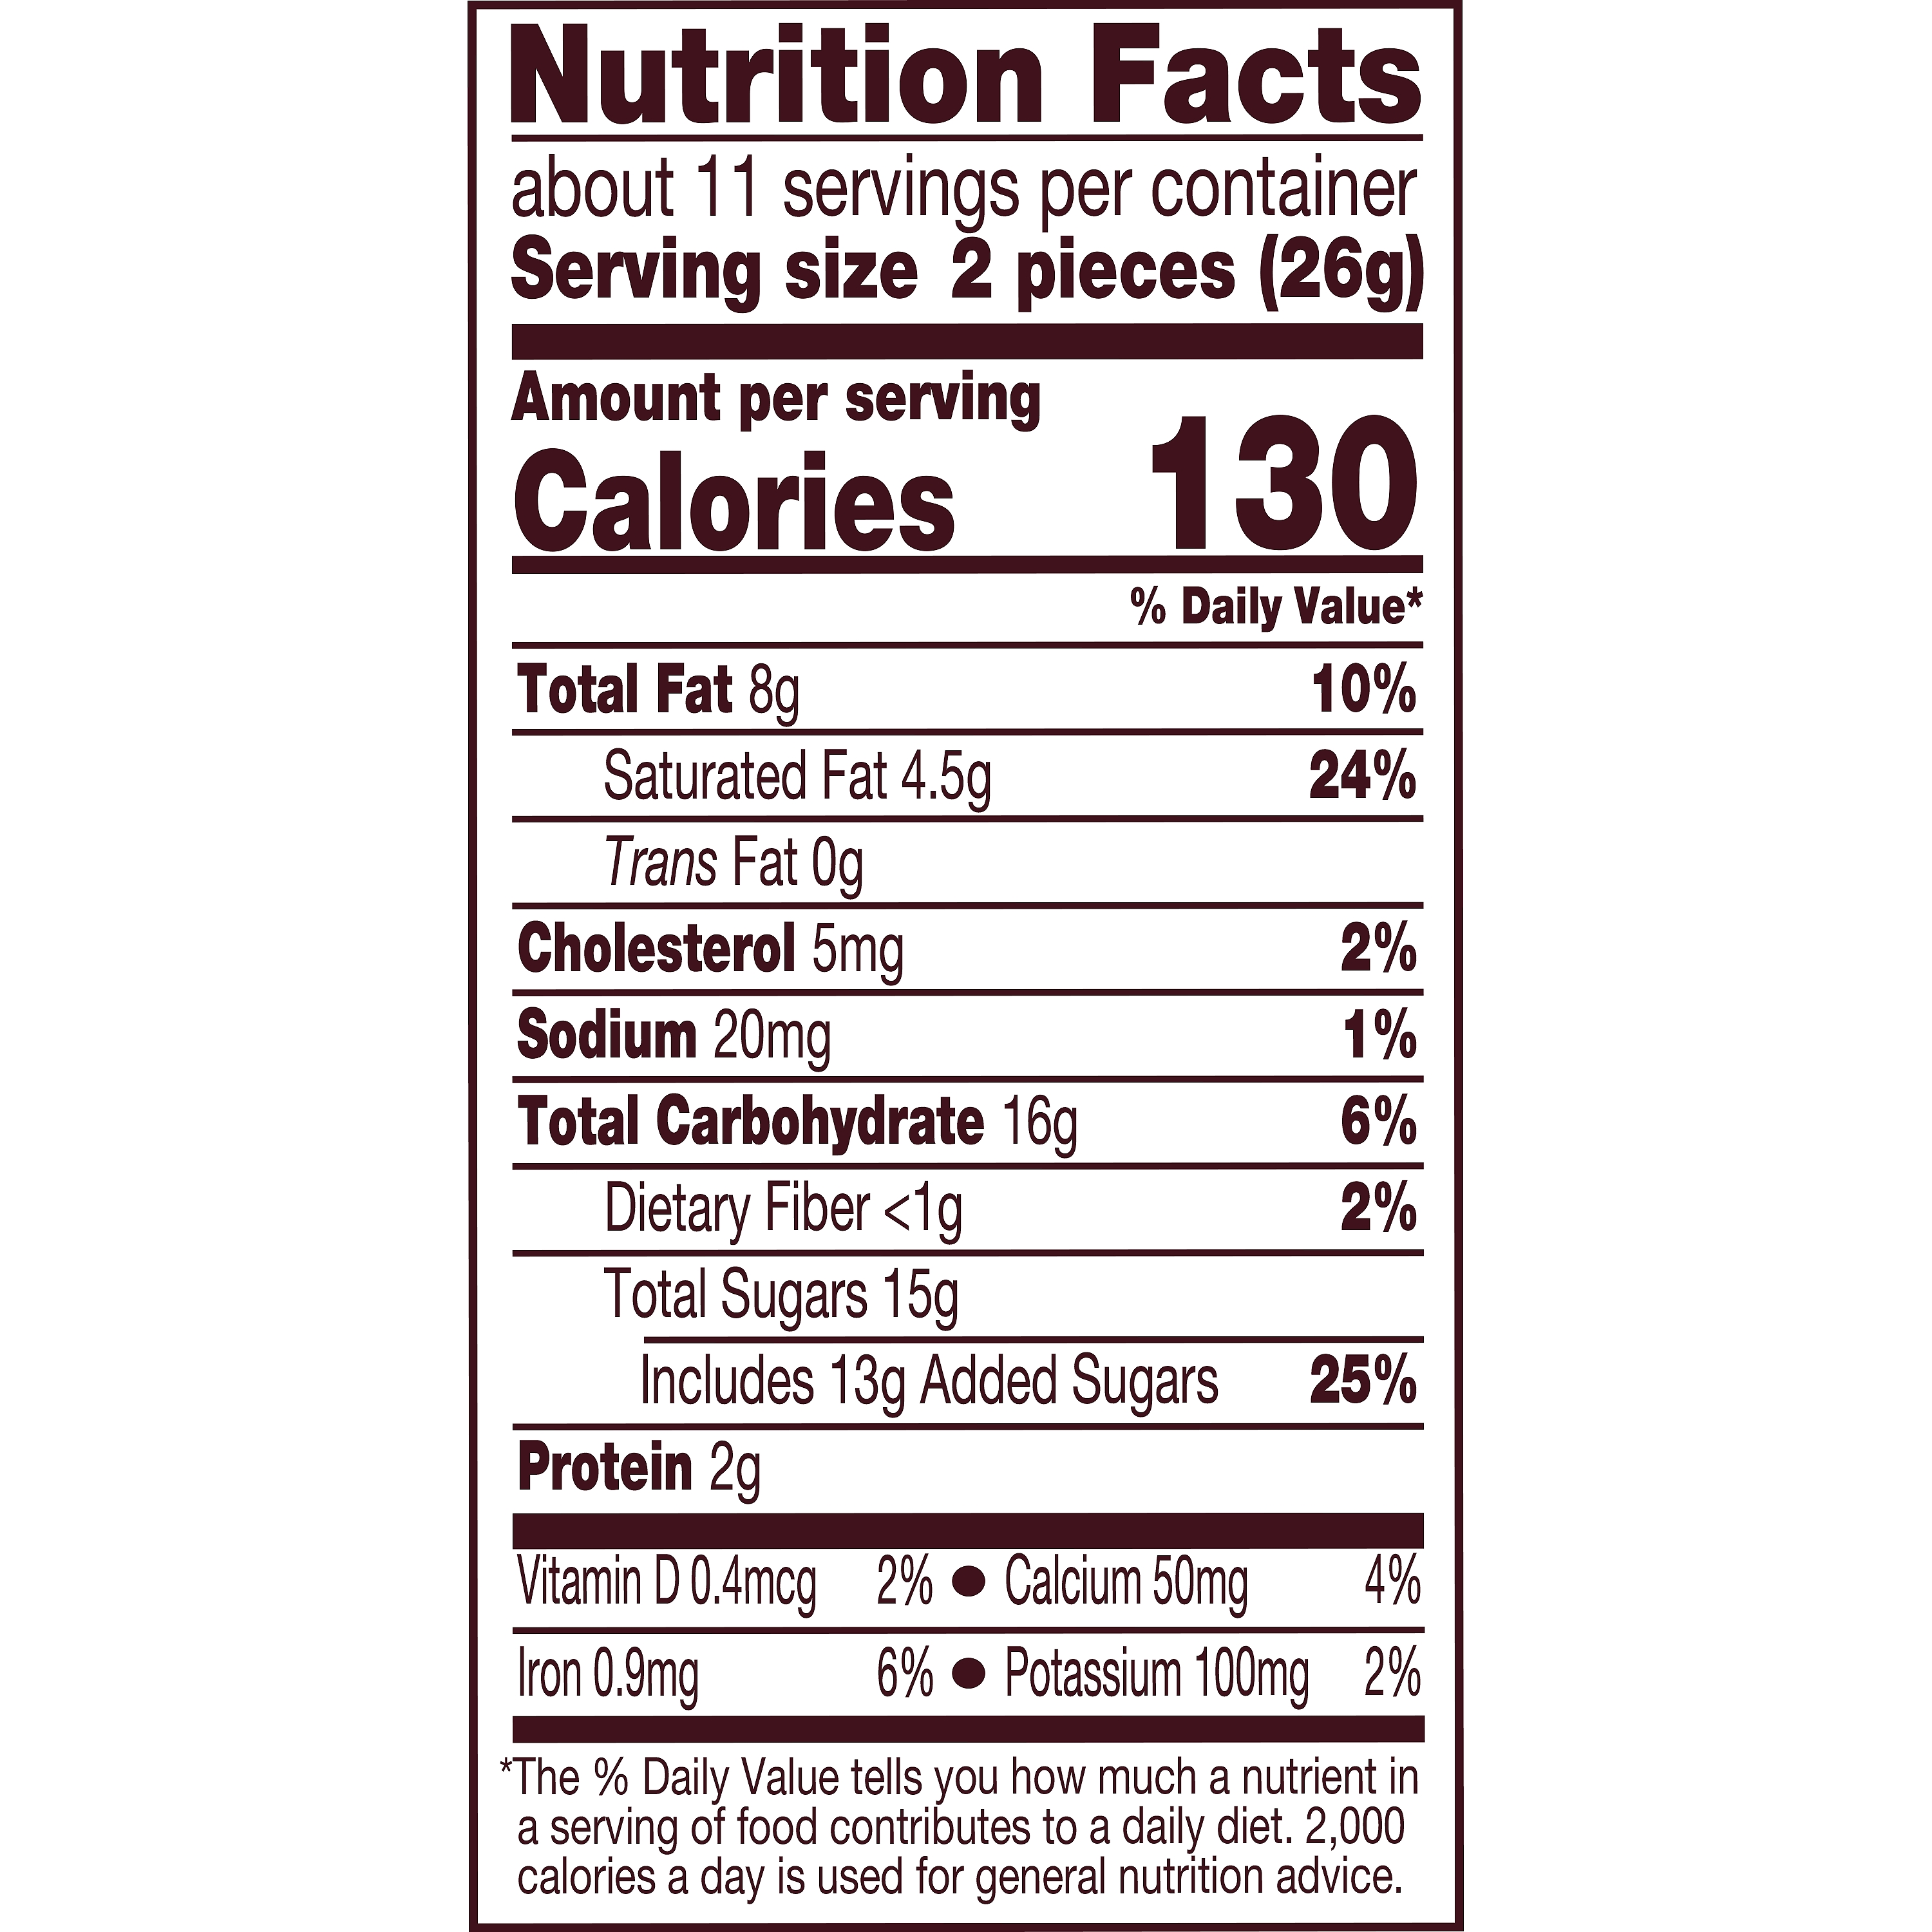 HERSHEY'S Milk Chocolate Snack Size Candy Bars, 10.35 oz bag